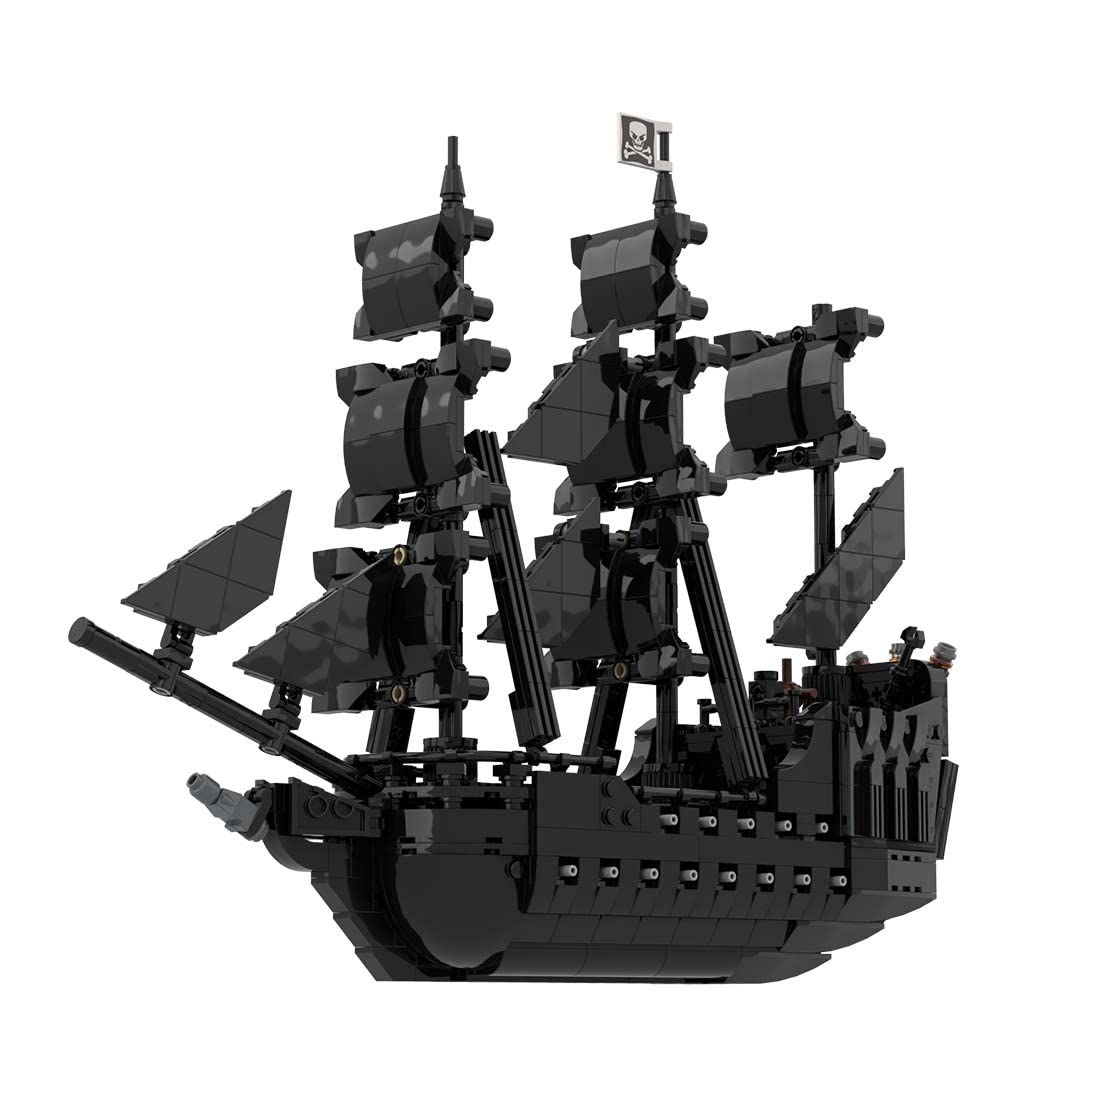 Lingxuinfo 1007PCS Pirate Black Pearl Ship Model Building Blocks MOC Set DIY Assembly Pirate Ship Model Kit Construction an